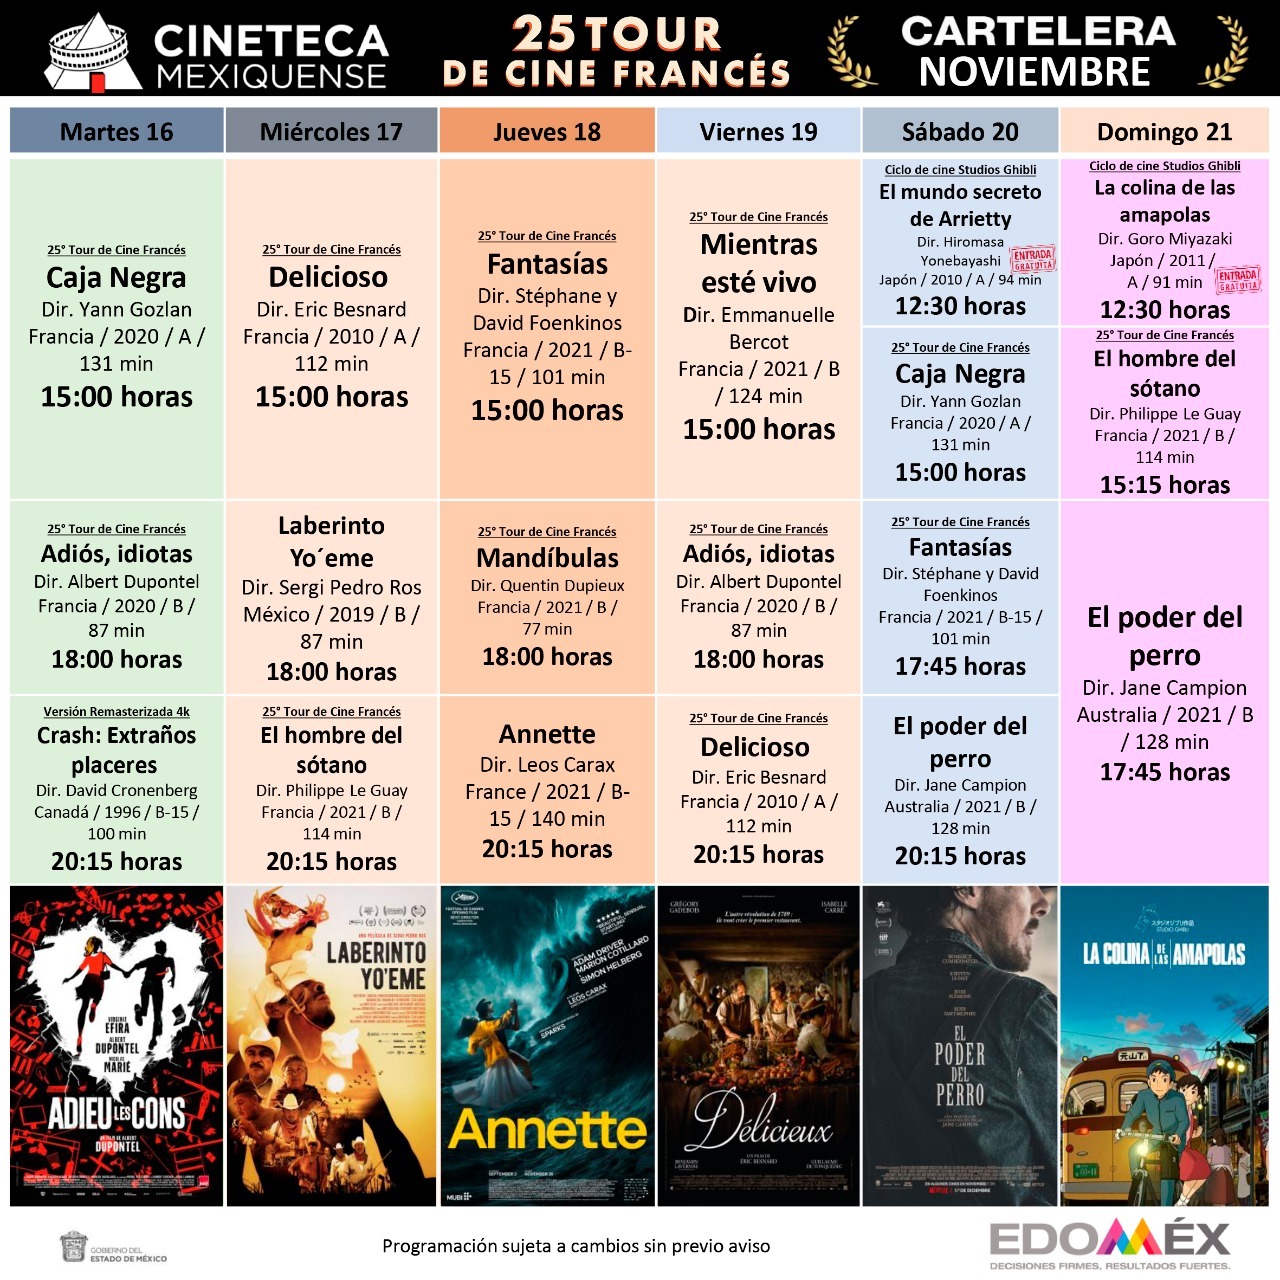 Llega 25 tour de cine francés a la cineteca mexiquense